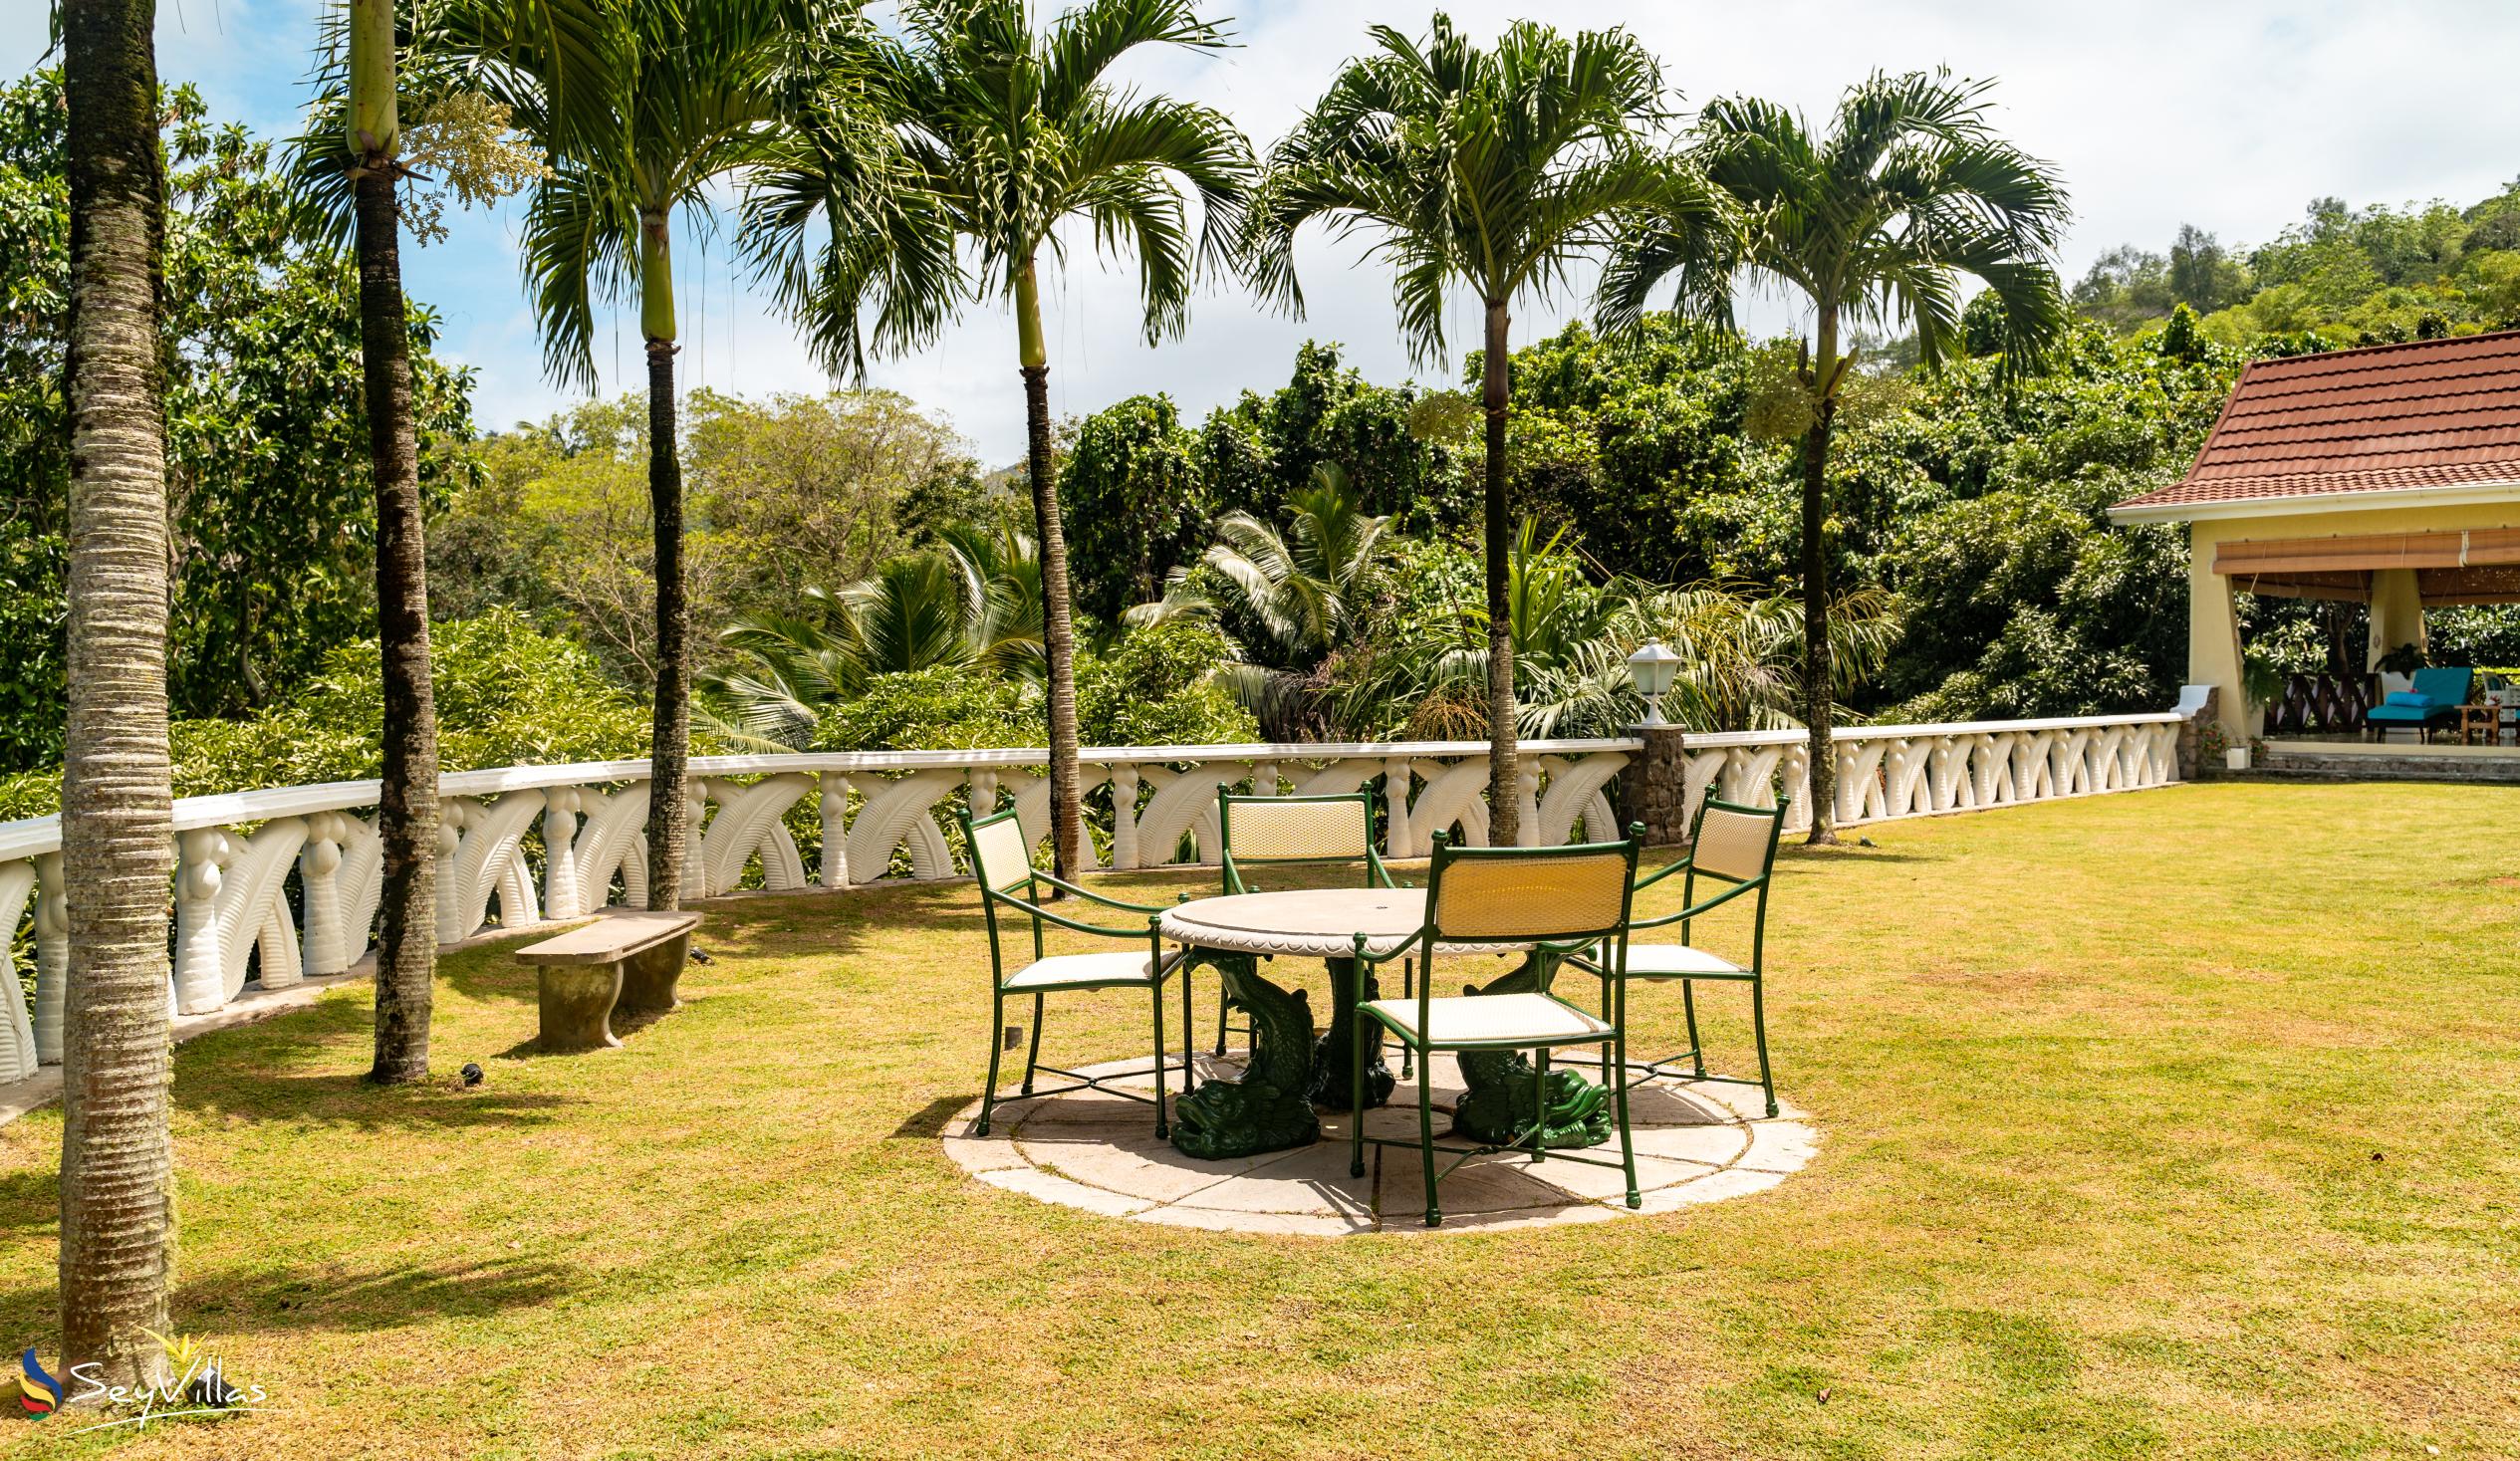 Foto 26: Villa Gazebo - Aussenbereich - Mahé (Seychellen)